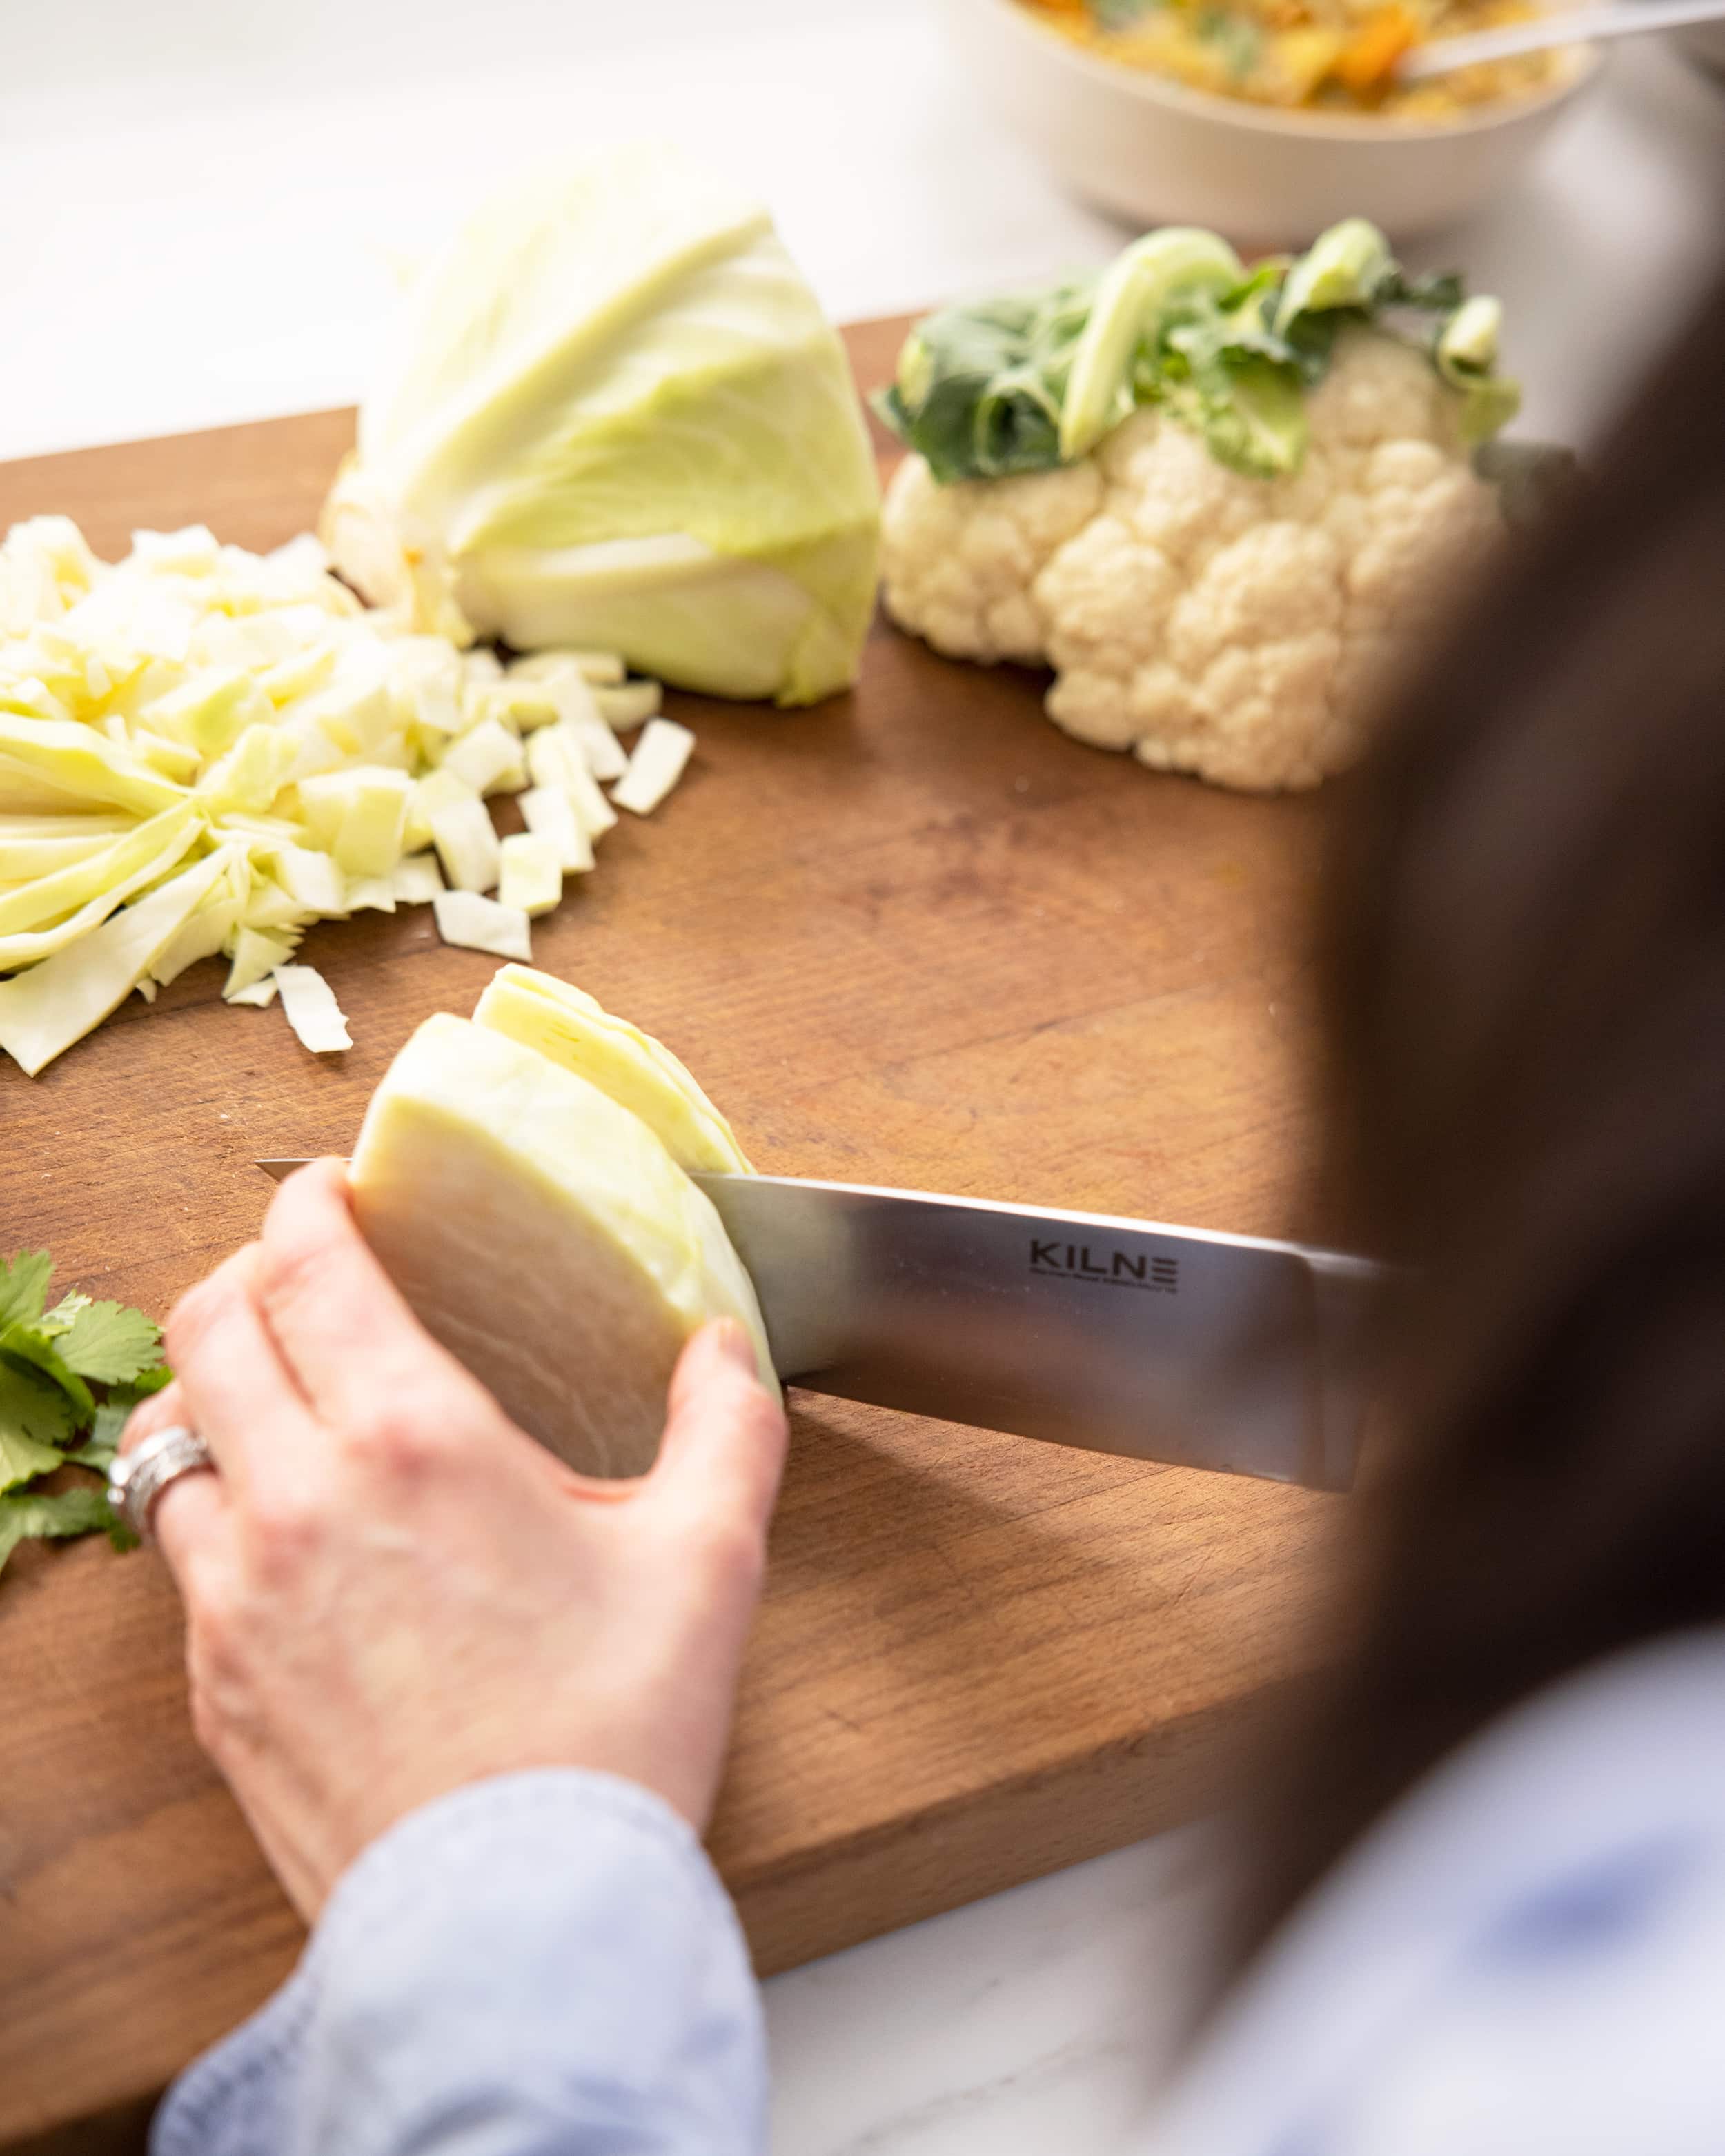 Cutting a cabbage